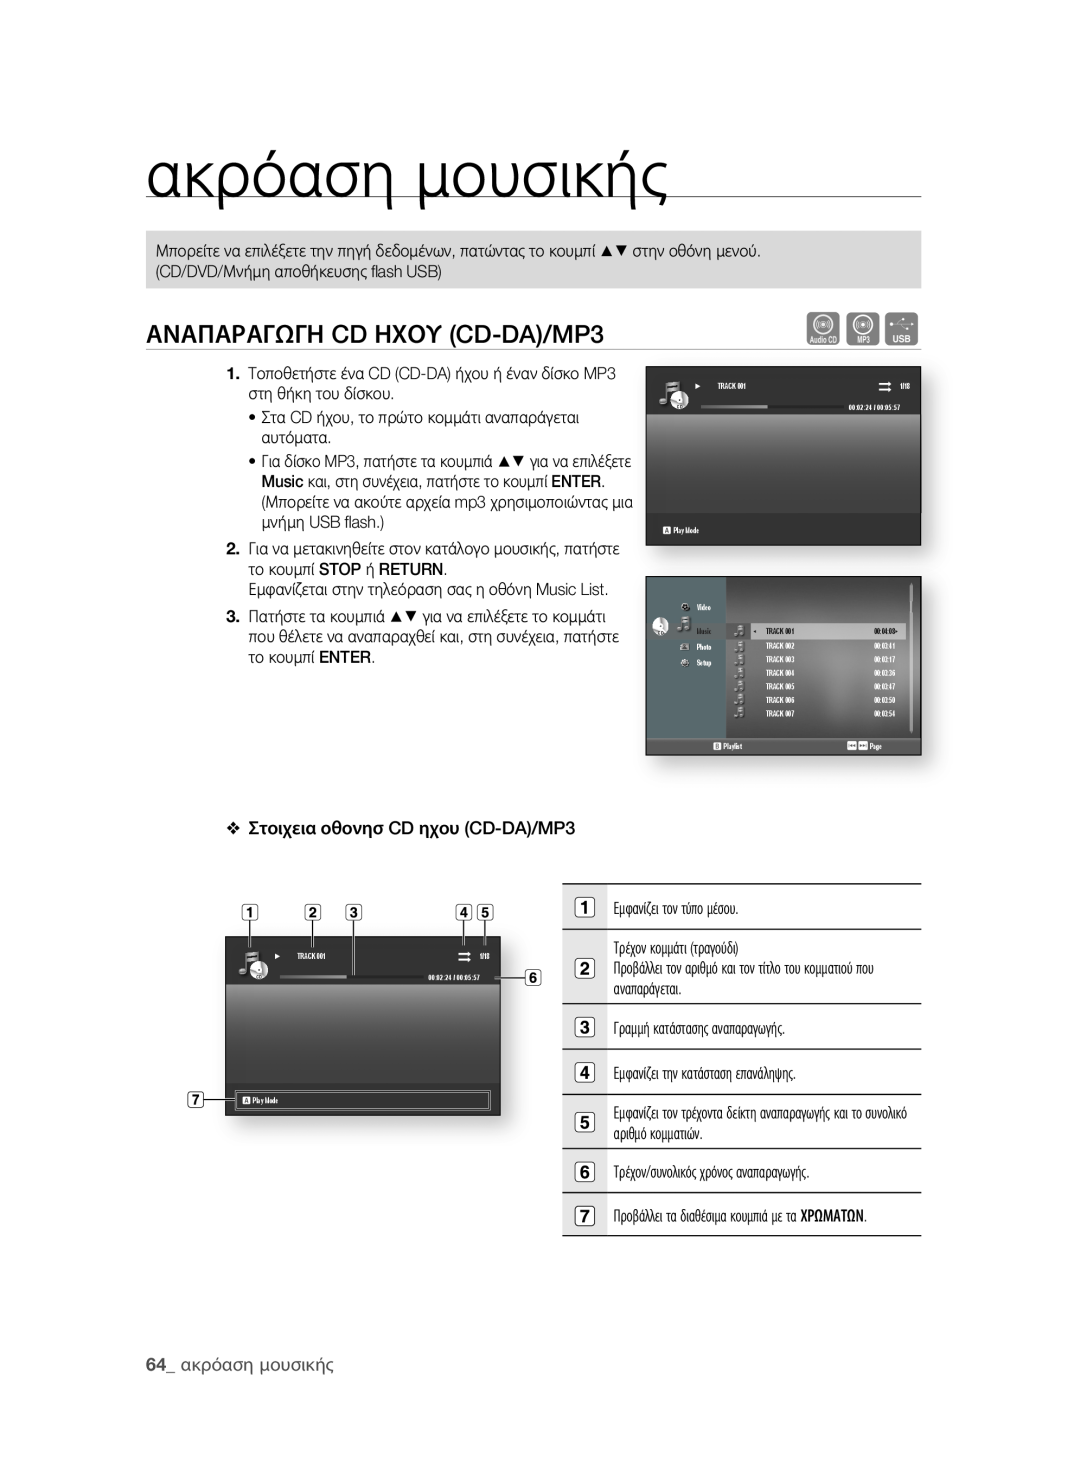 Samsung BD-P1580/EDC manual ΑΝΑΠΑρΑΓΩΓη CD ηΧοΥ CD-DA/MP3, στοιχεια οθονησ CD ηχου CD-DA/MP3,  ακρόαση μουσικής 